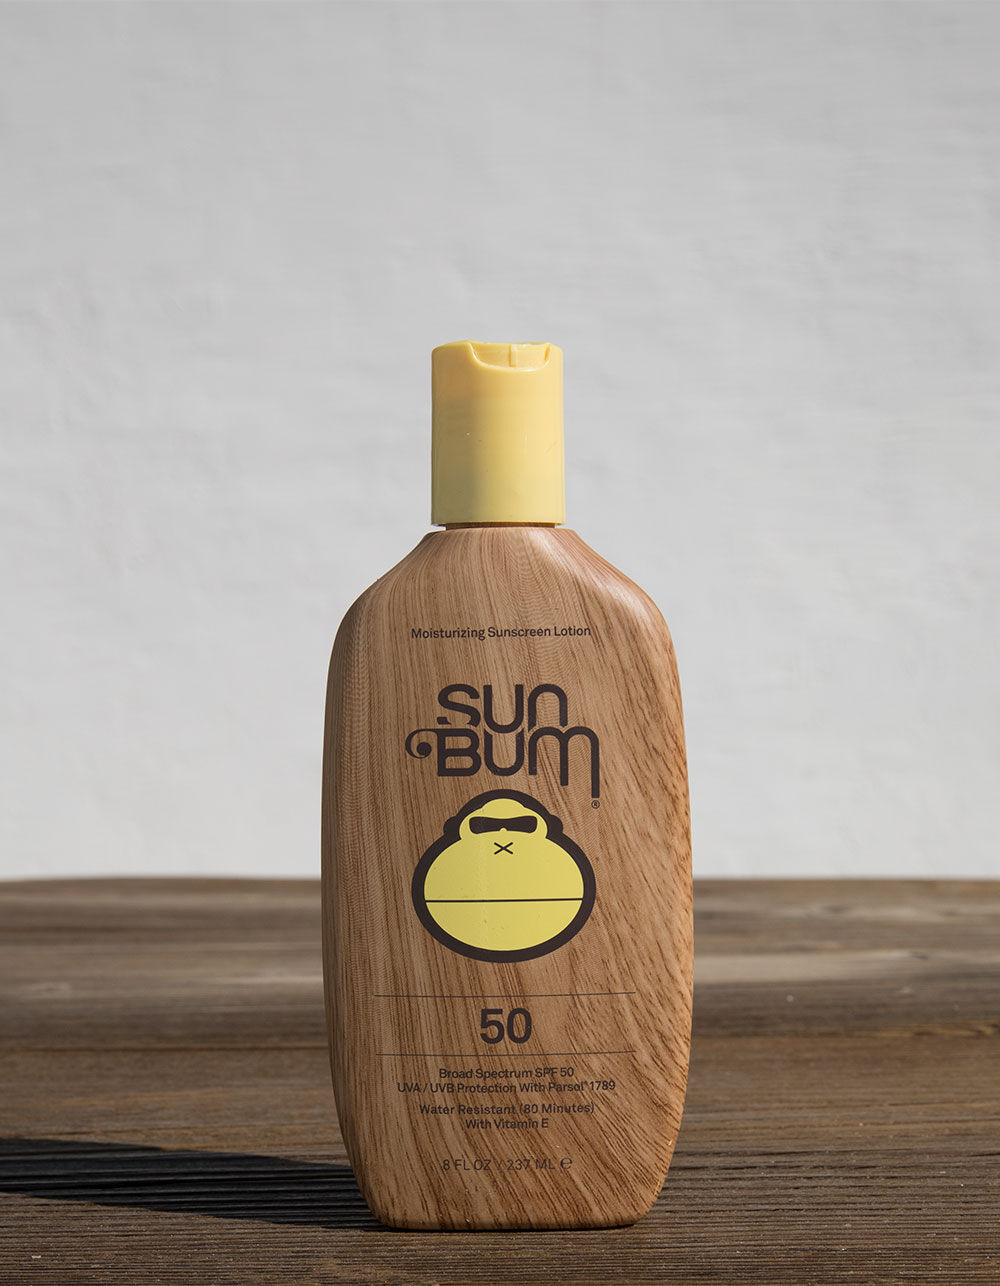 SUN BUM SPF 50 Moisturizing Sunscreen Lotion (8oz)